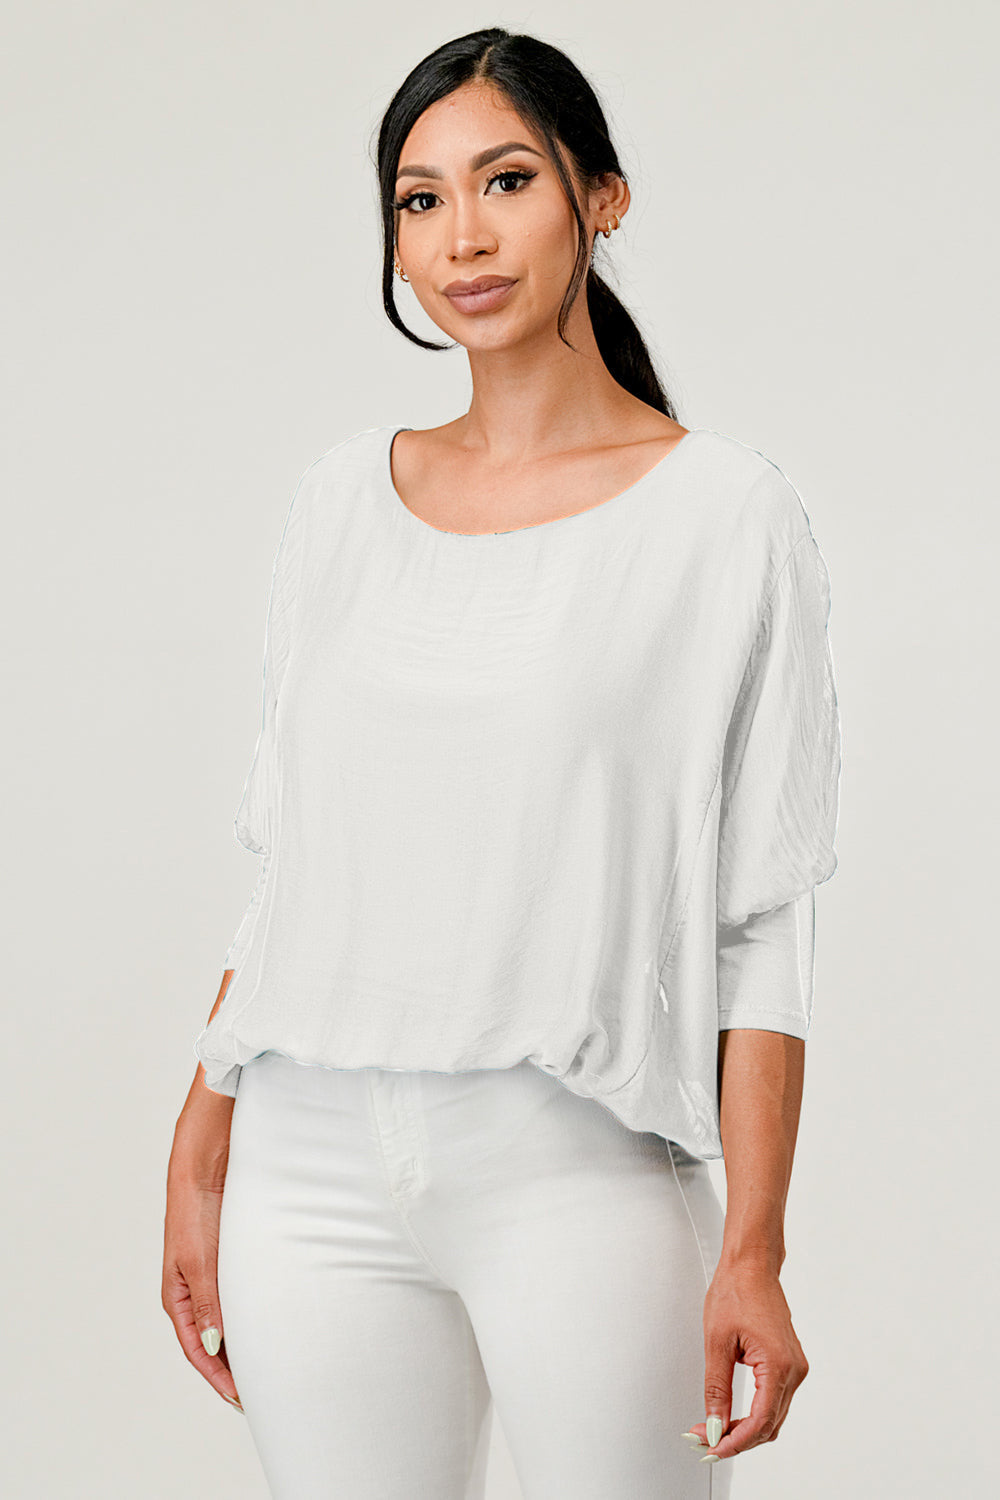 Raw Moda Solid Silk Elastic Sleeves Top Apparel & Accessories Raw Moda One Size White 